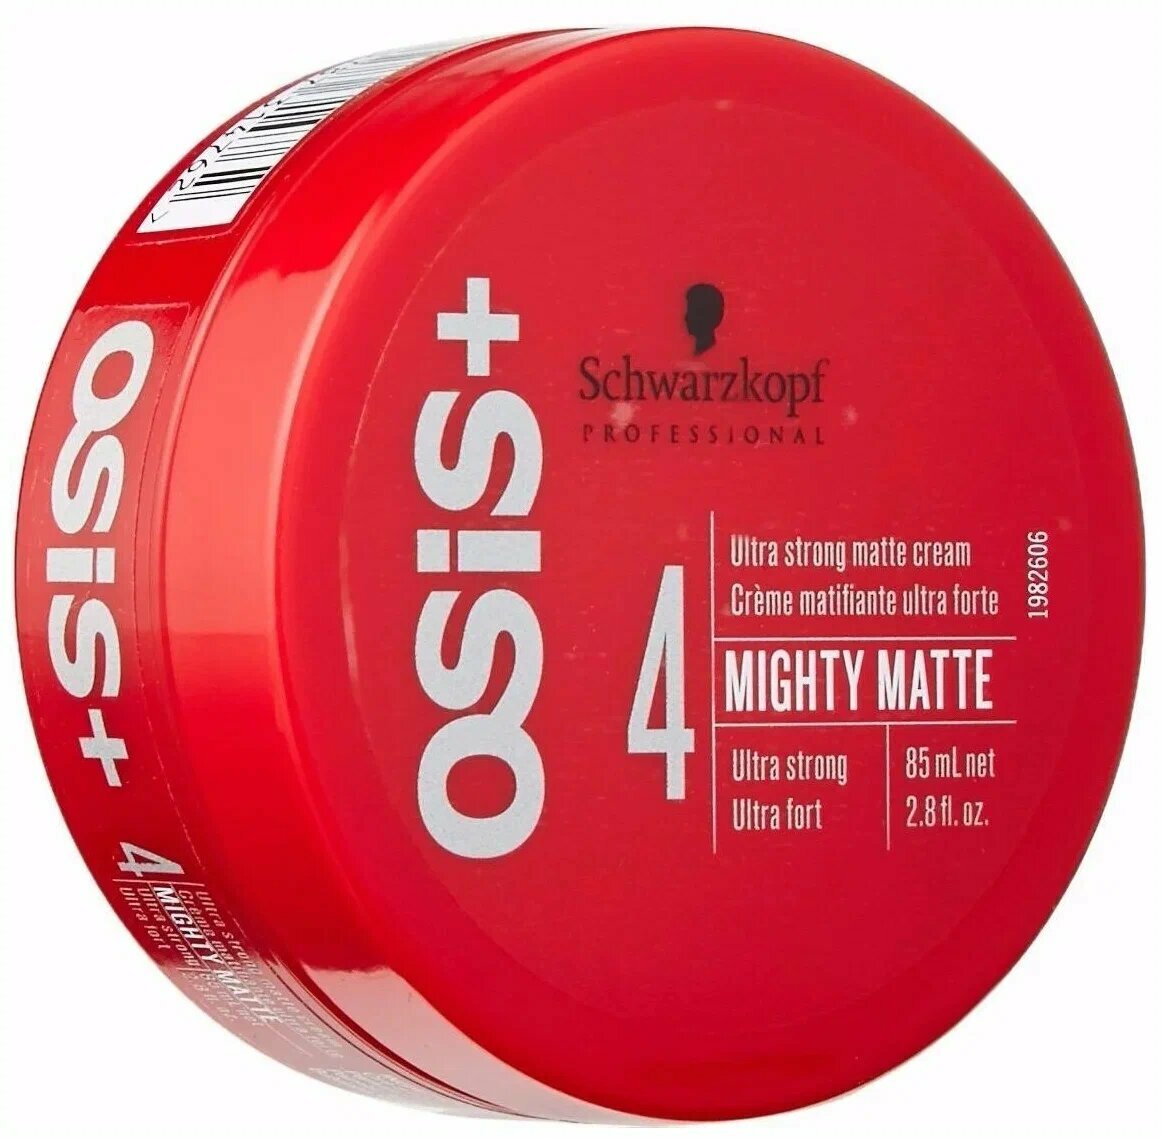       Schwarzkopf Professional Osis+ Mighty Matte 4 85 